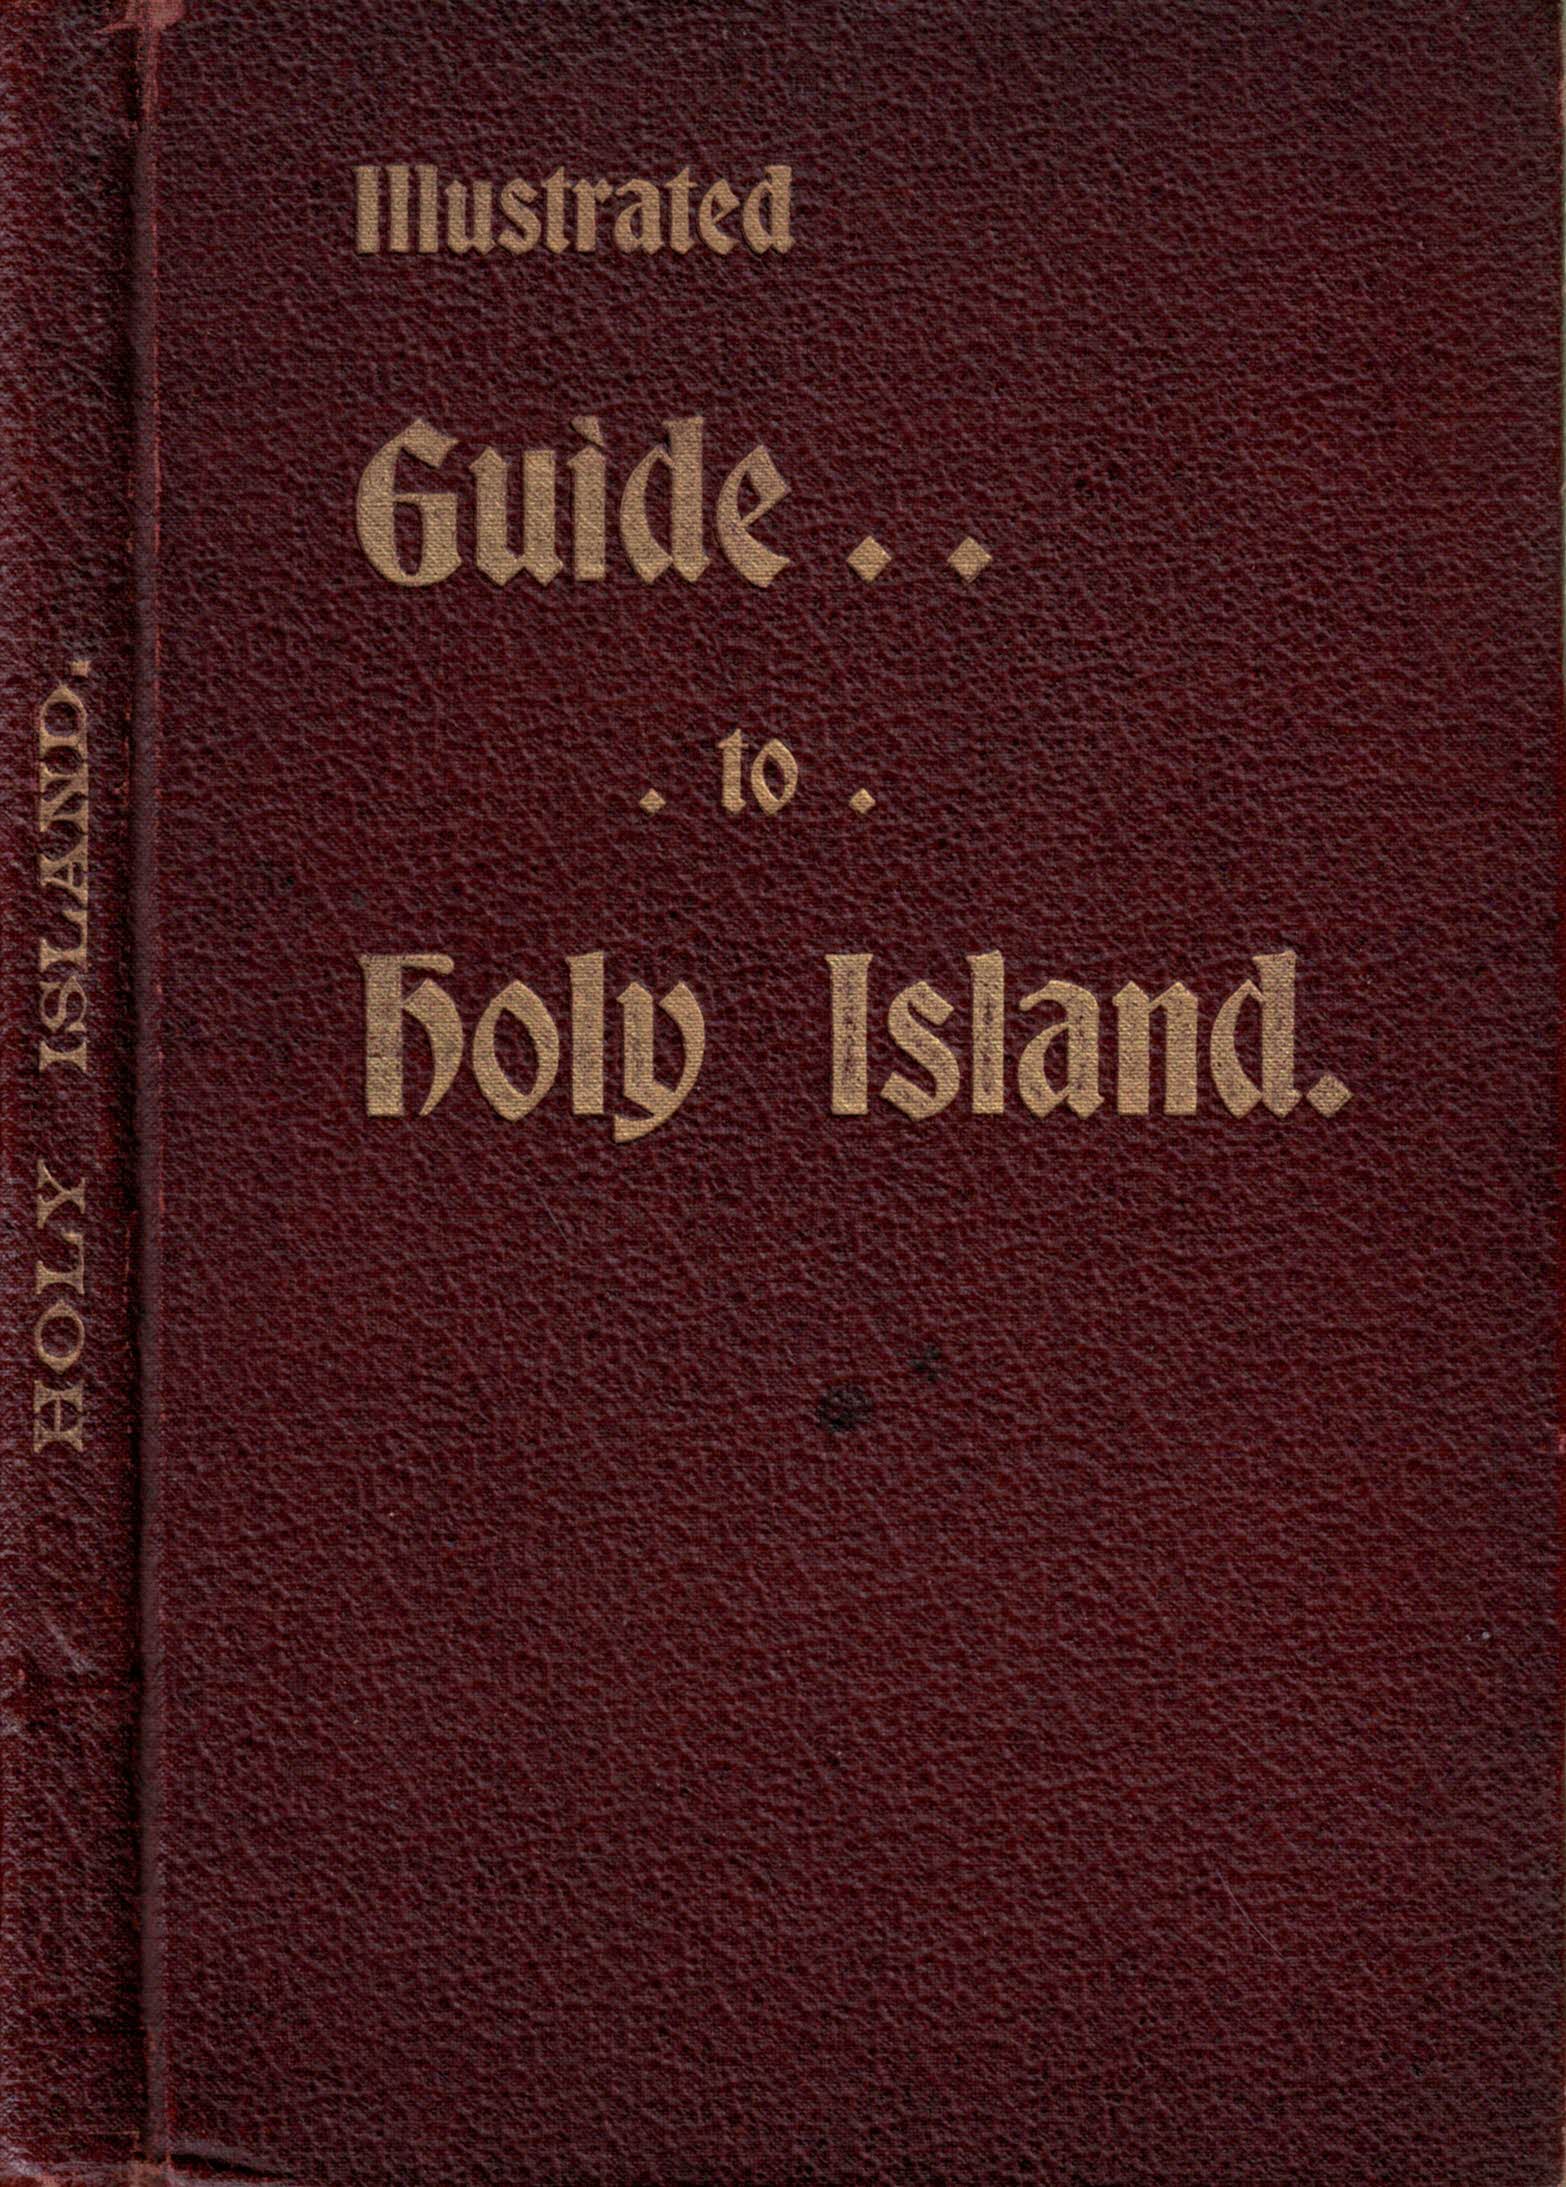 [ANON] - A Short History of Holy Island (Insula Sacra), Formerly 